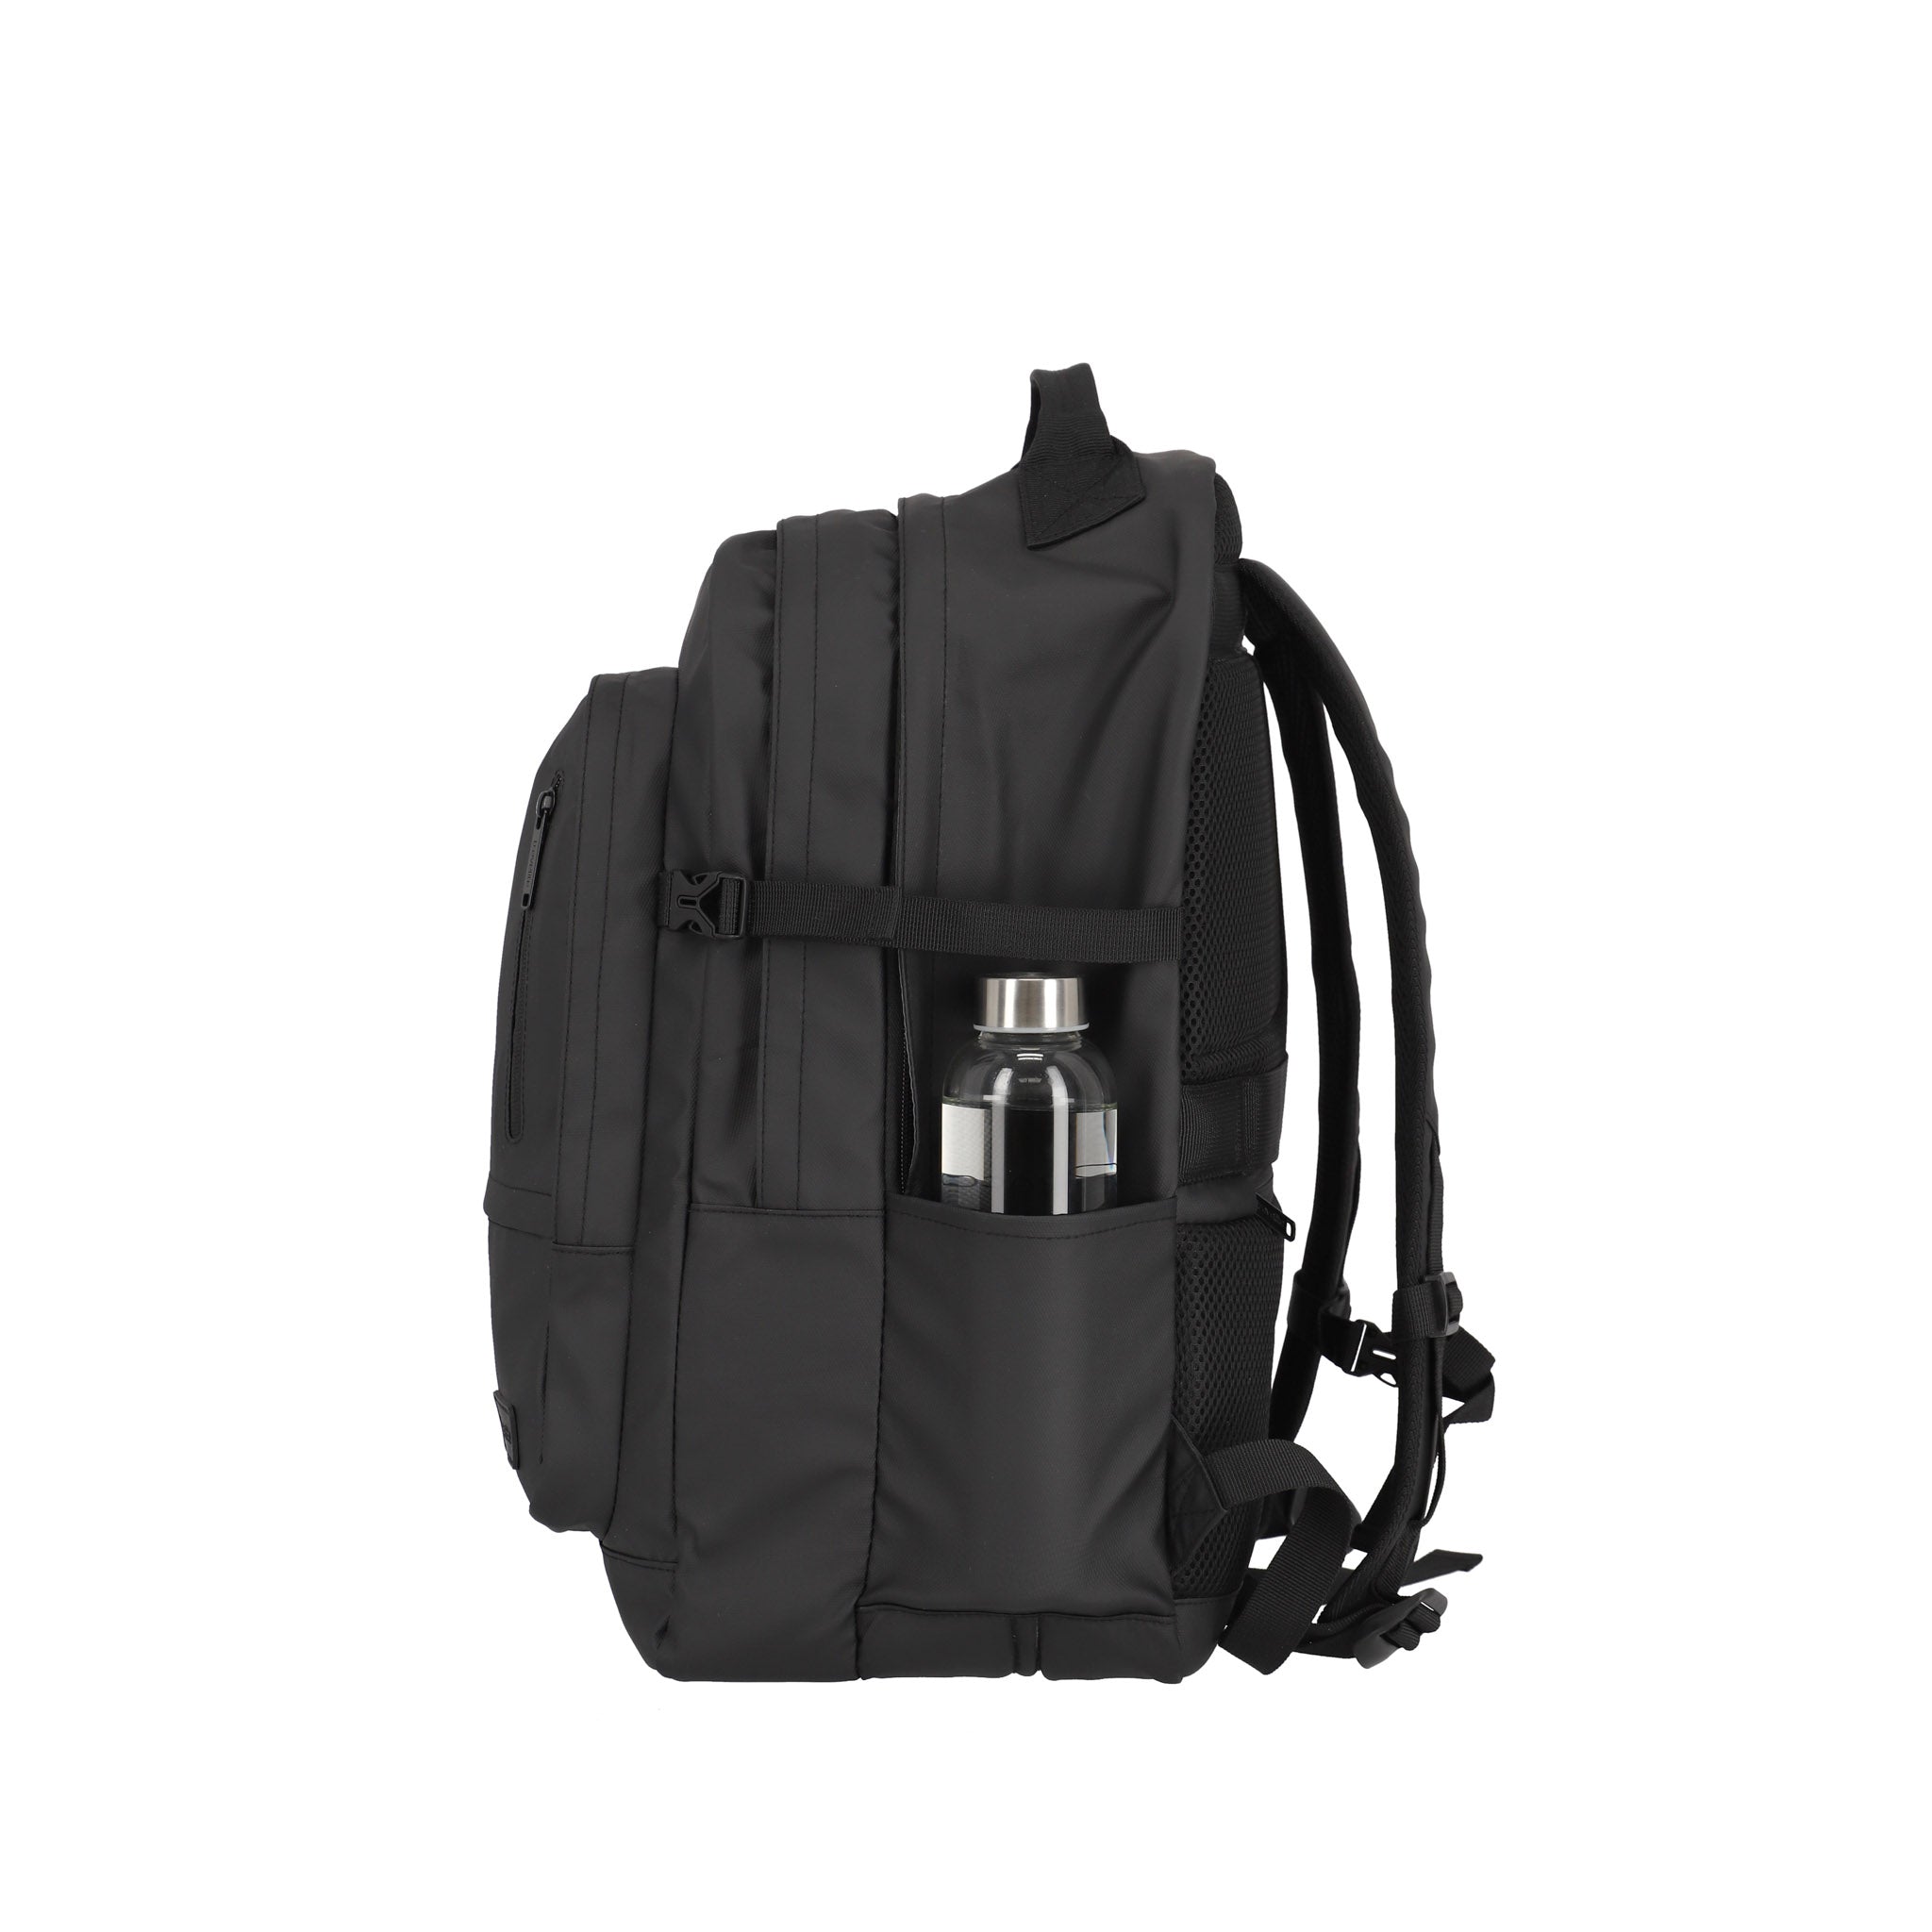 Laptop backpack 'Basics' black